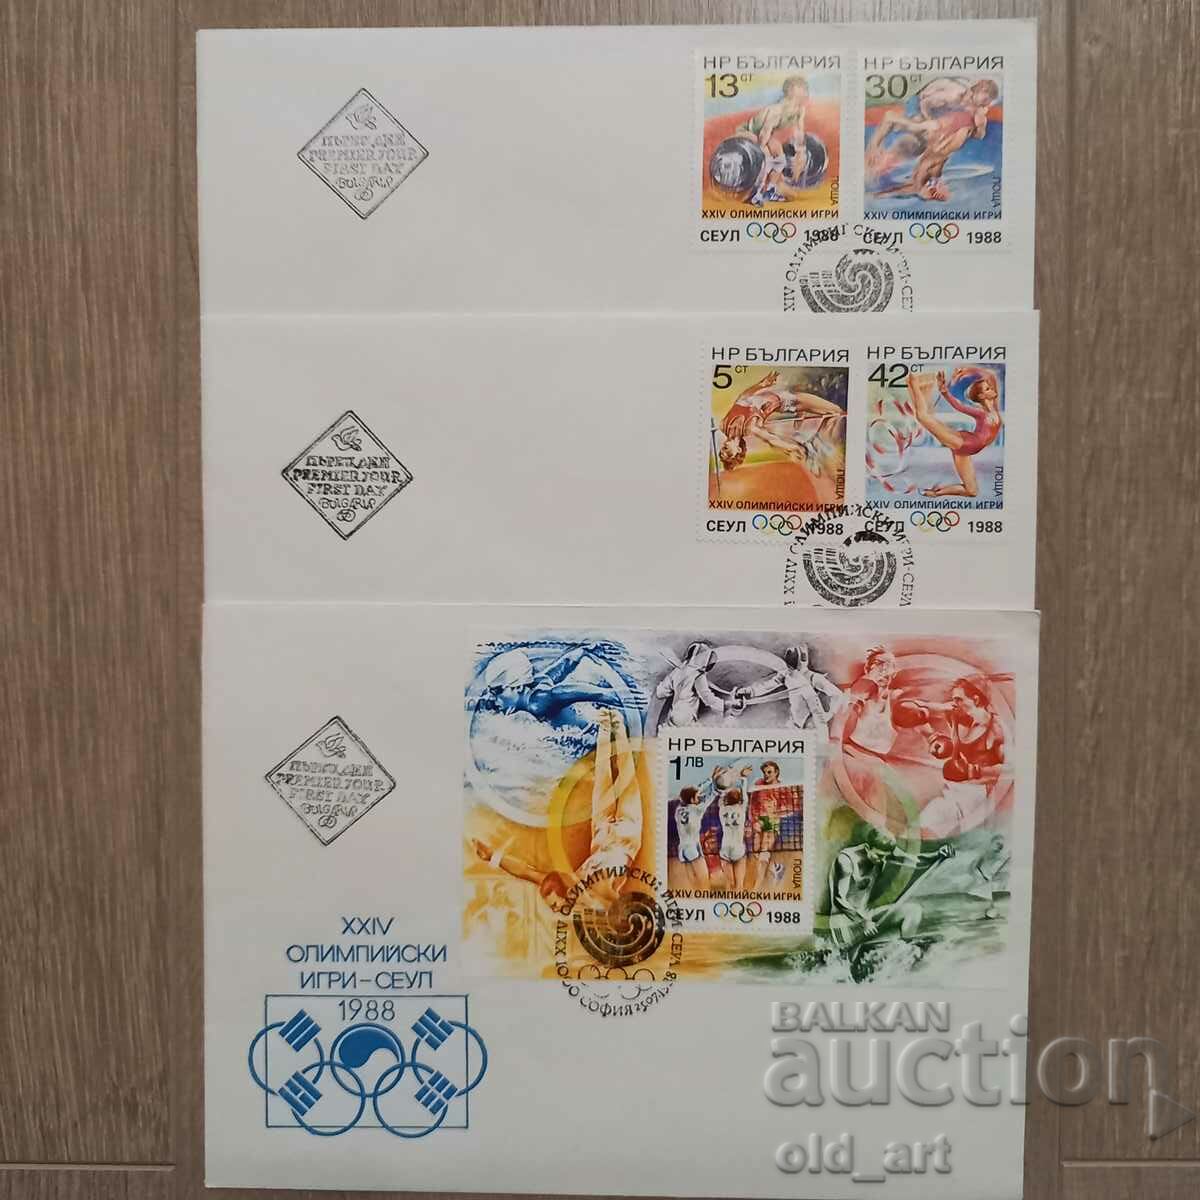 Mailing envelopes - Seoul 88 Olympic Games